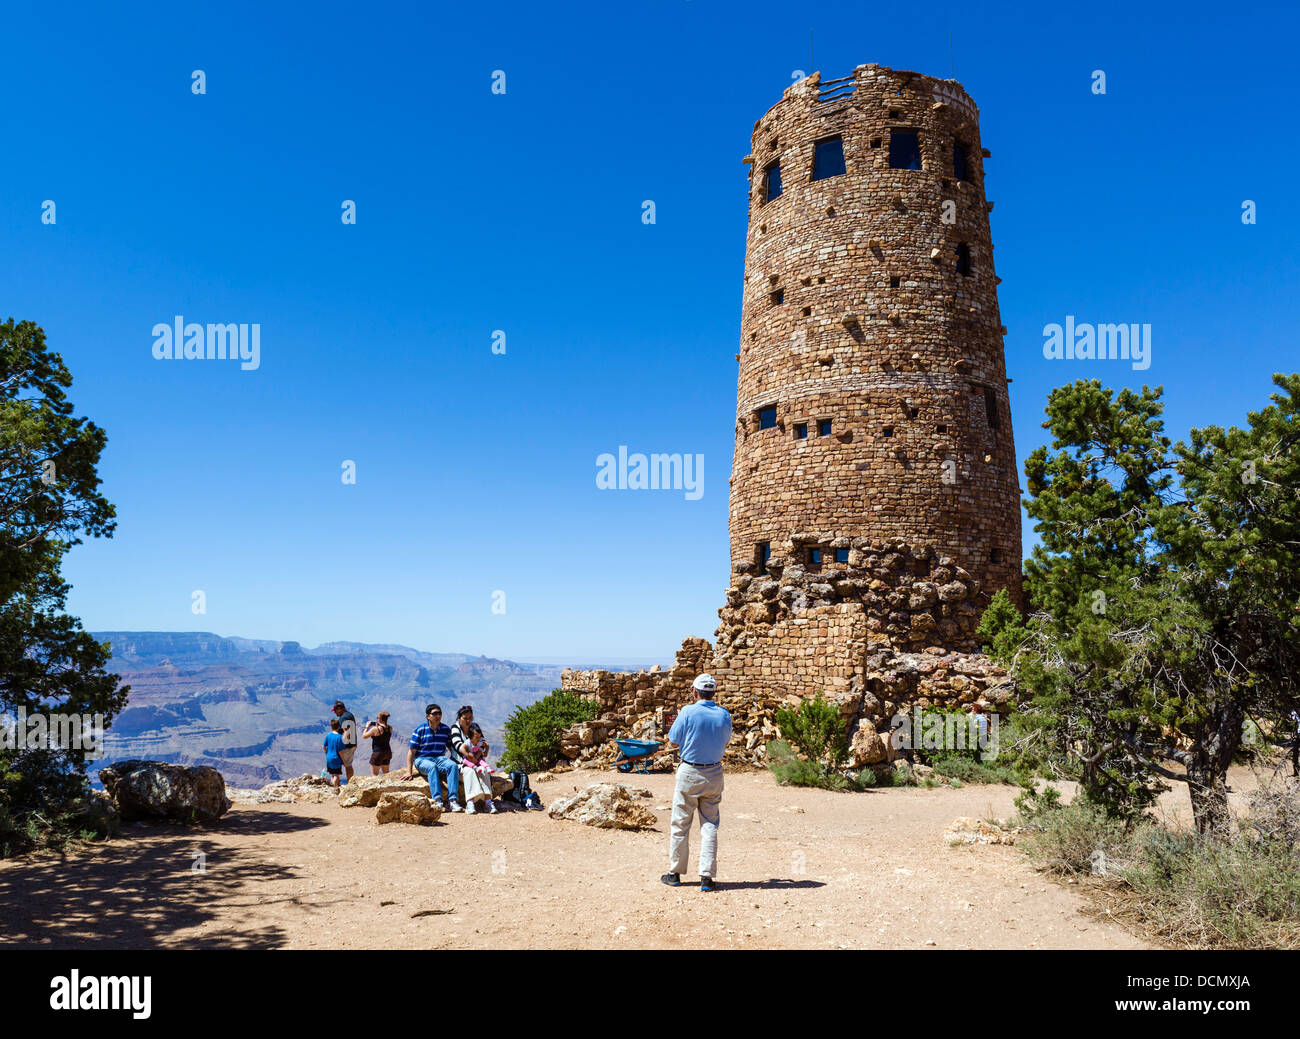 Touristen in Wüste anzeigen Wachturm, South Rim, Grand Canyon National Park, Arizona, USA Stockfoto